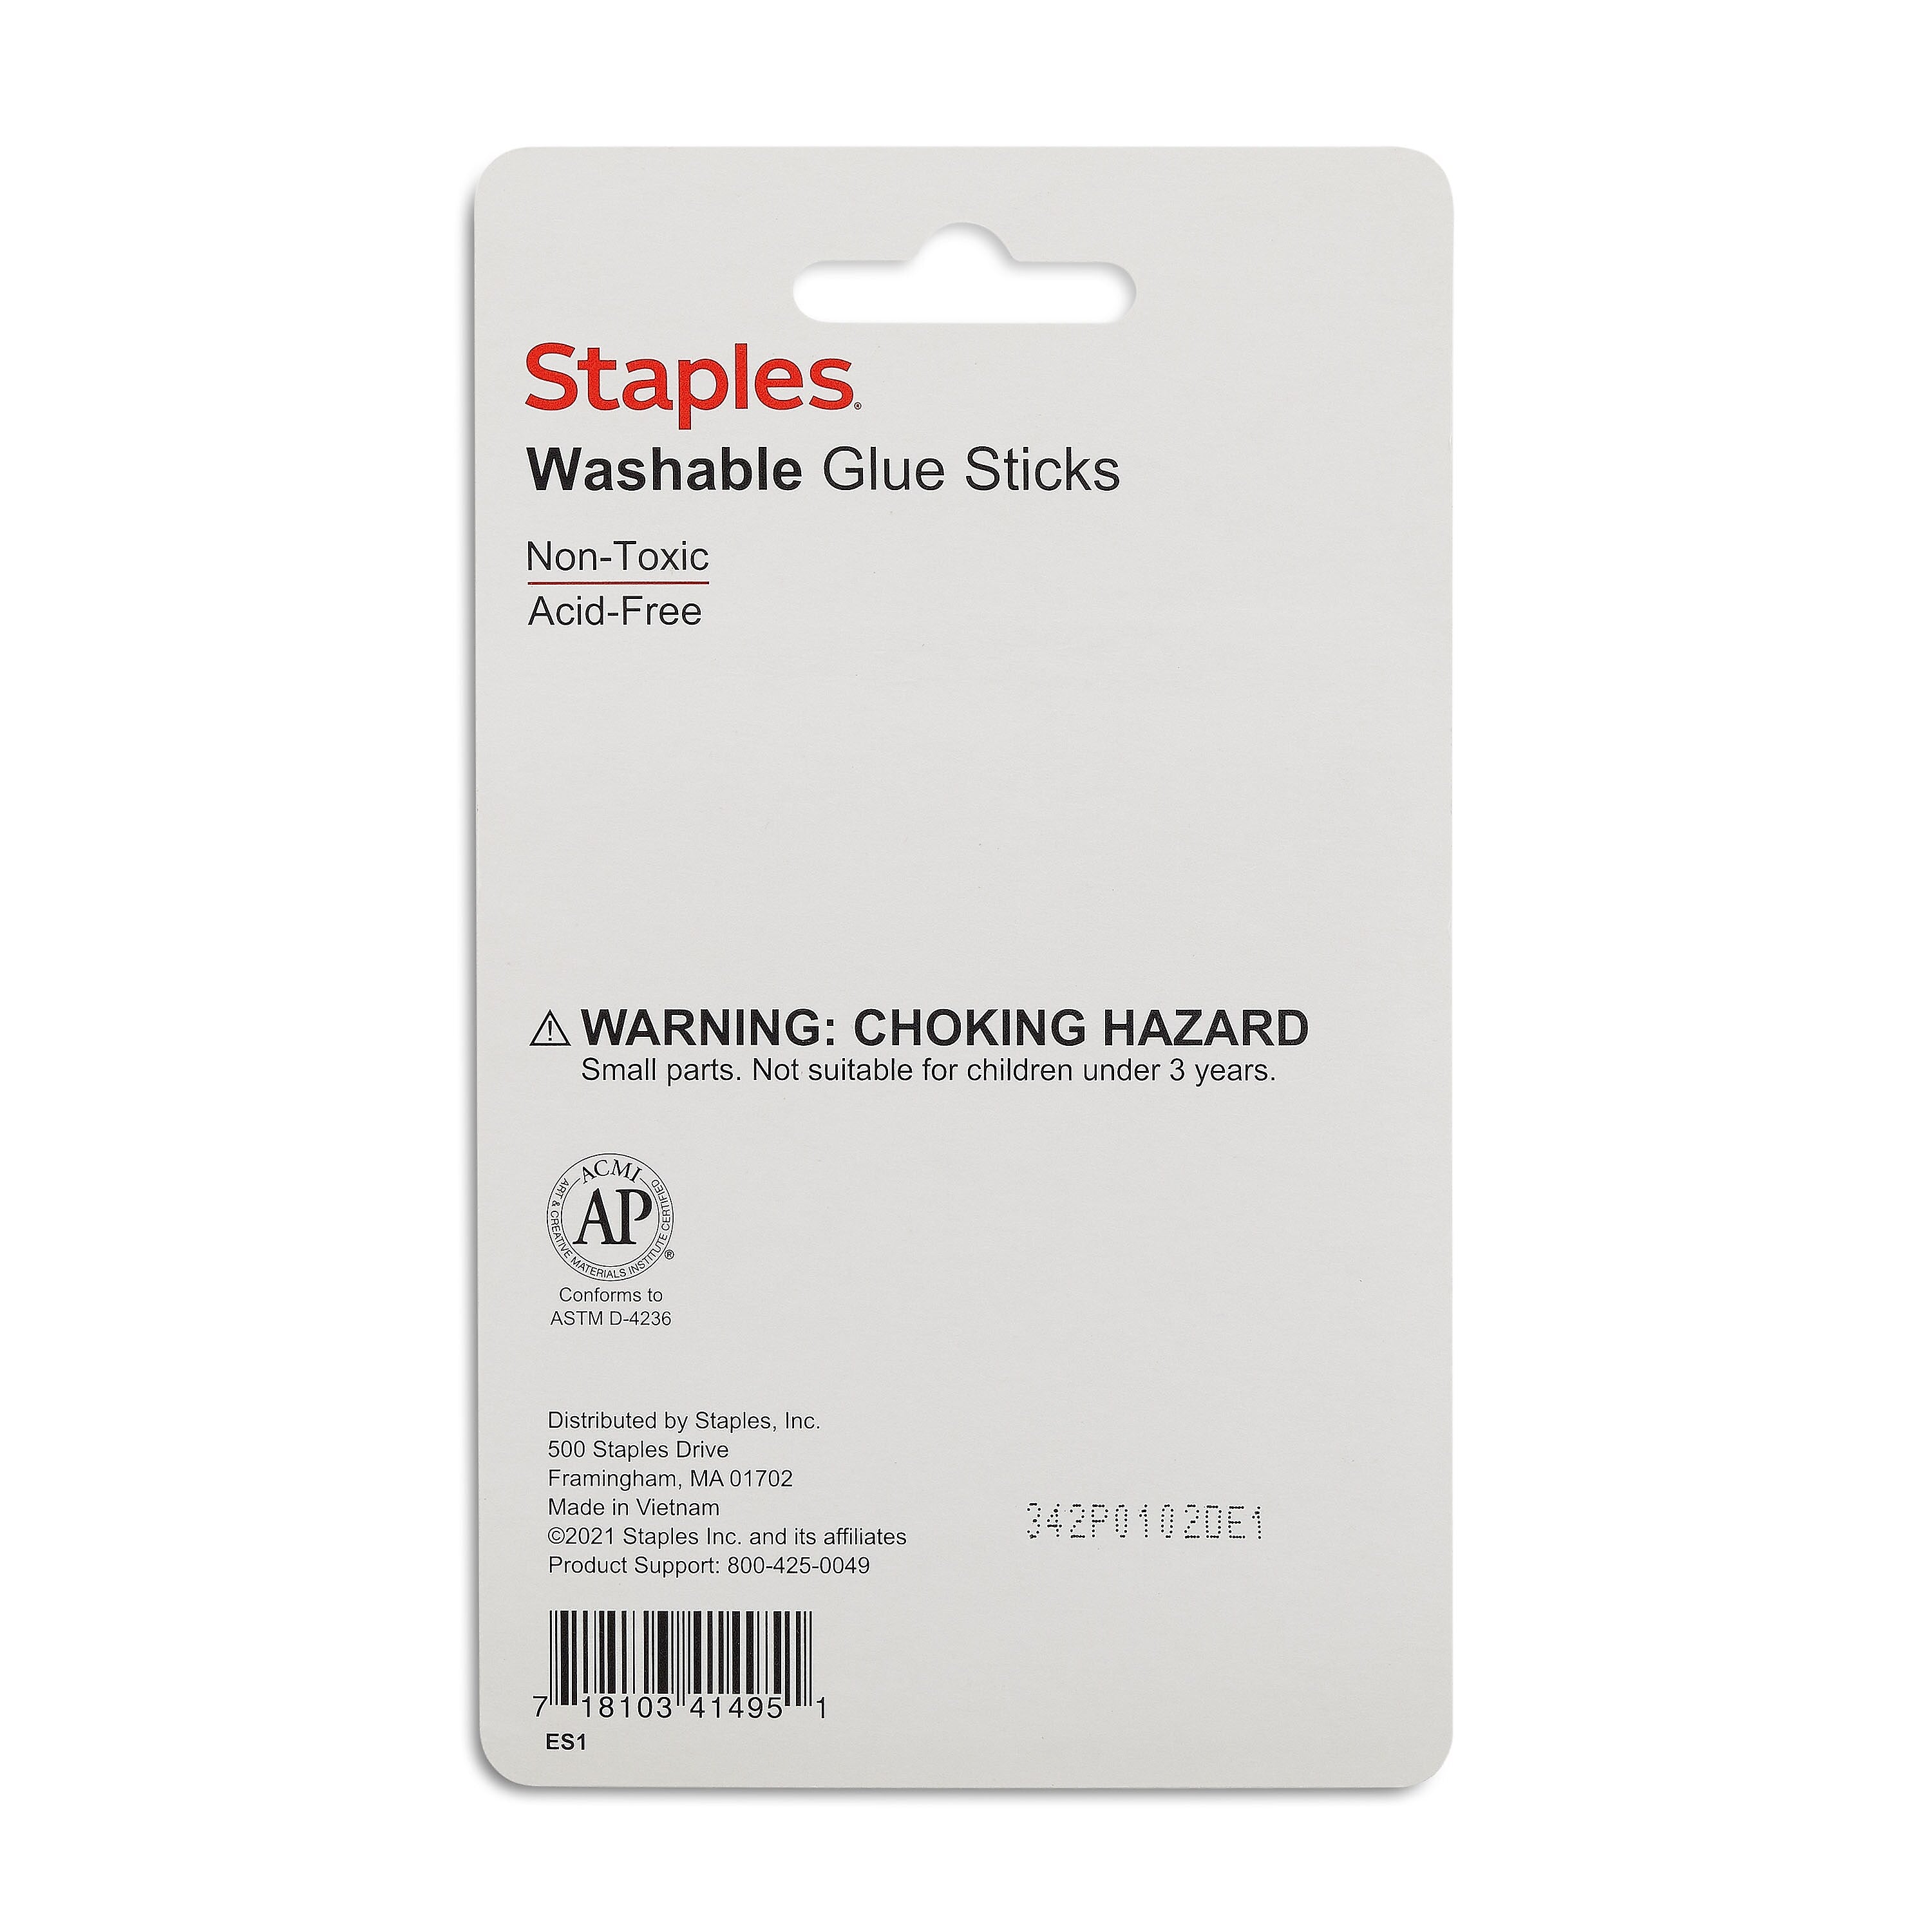 Staples Washable Glue Sticks, 0.28 oz., 4/Pack